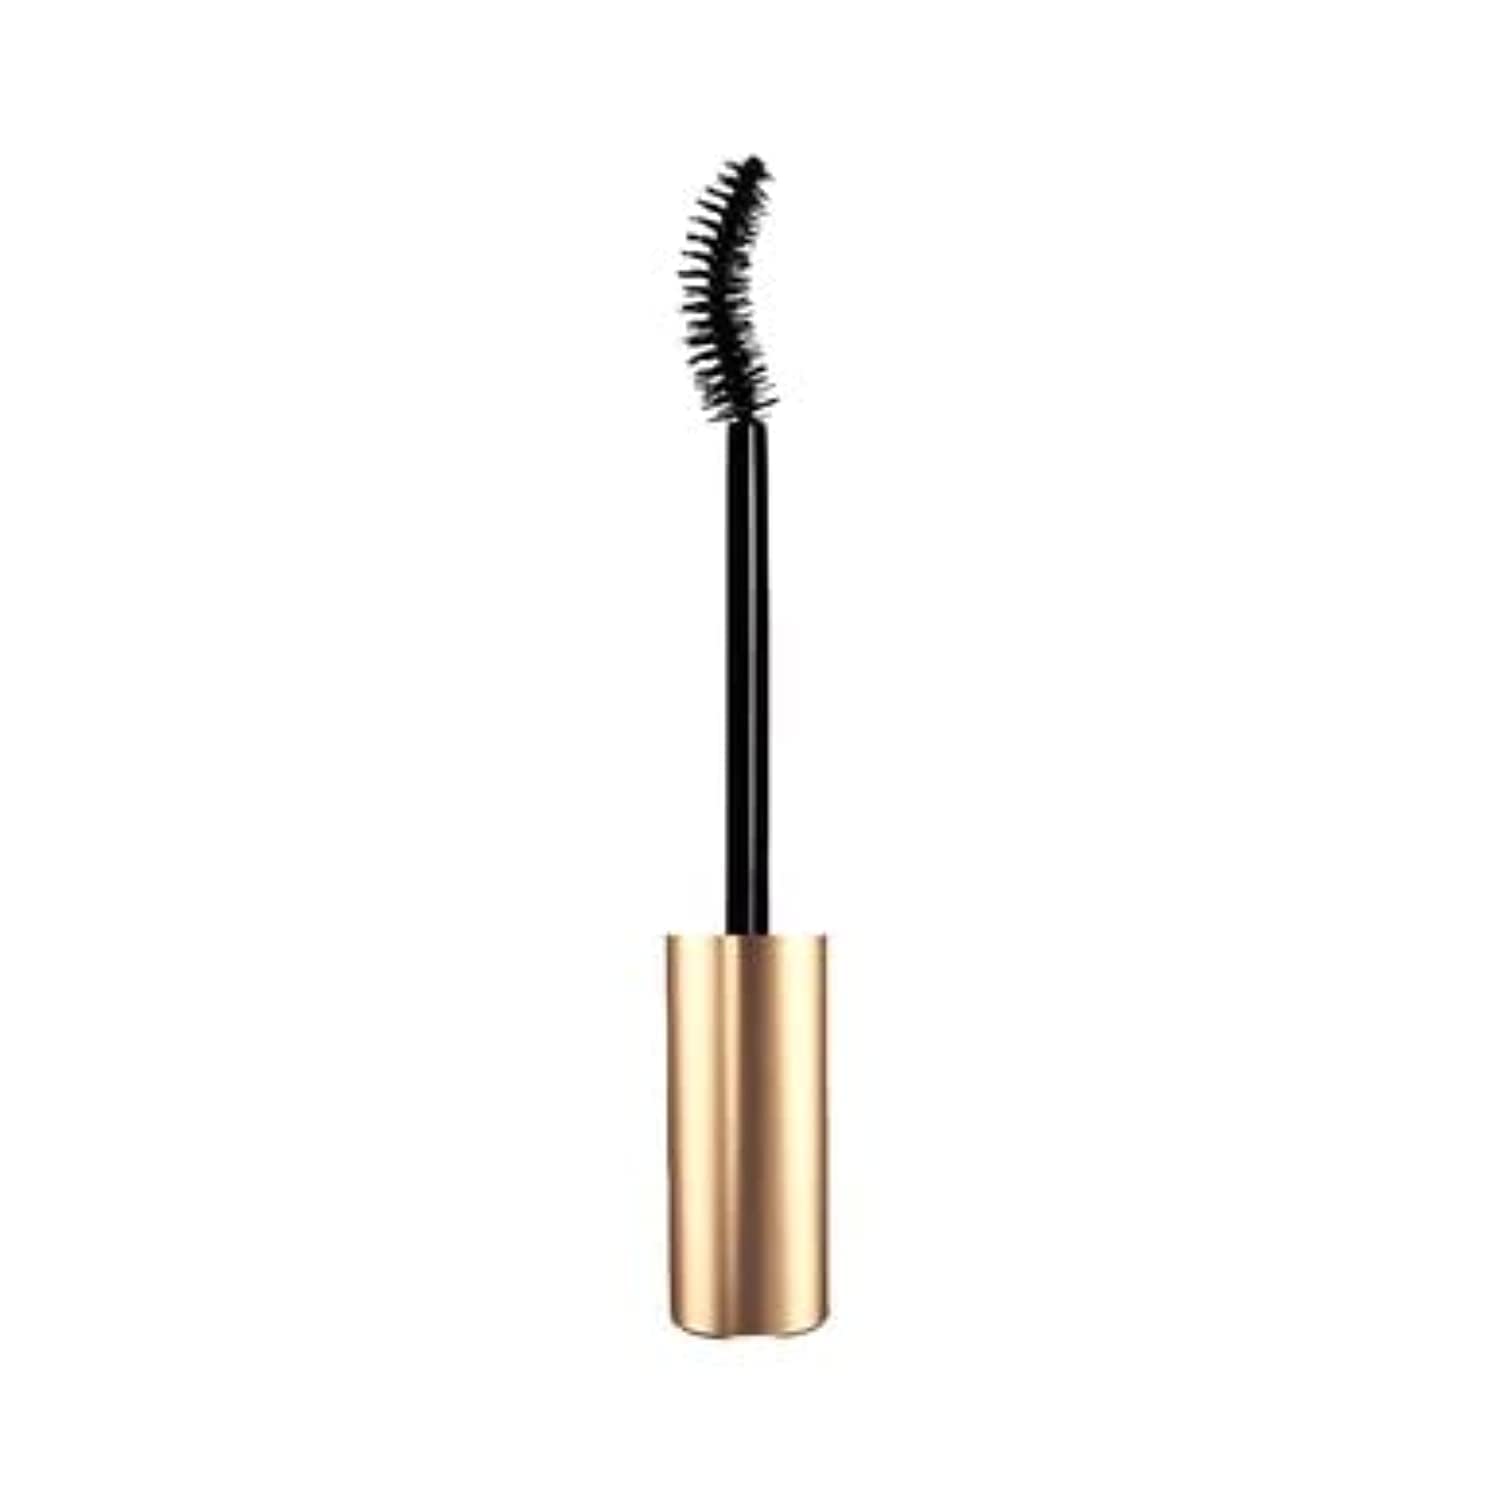 L’Oreal Paris Makeup Voluminous Mascara Original, Curved Brush Lifts & Builds Lashes Up To 5X Volume, Clump Free, Smudge Free, Black, 0.28 Fl Oz